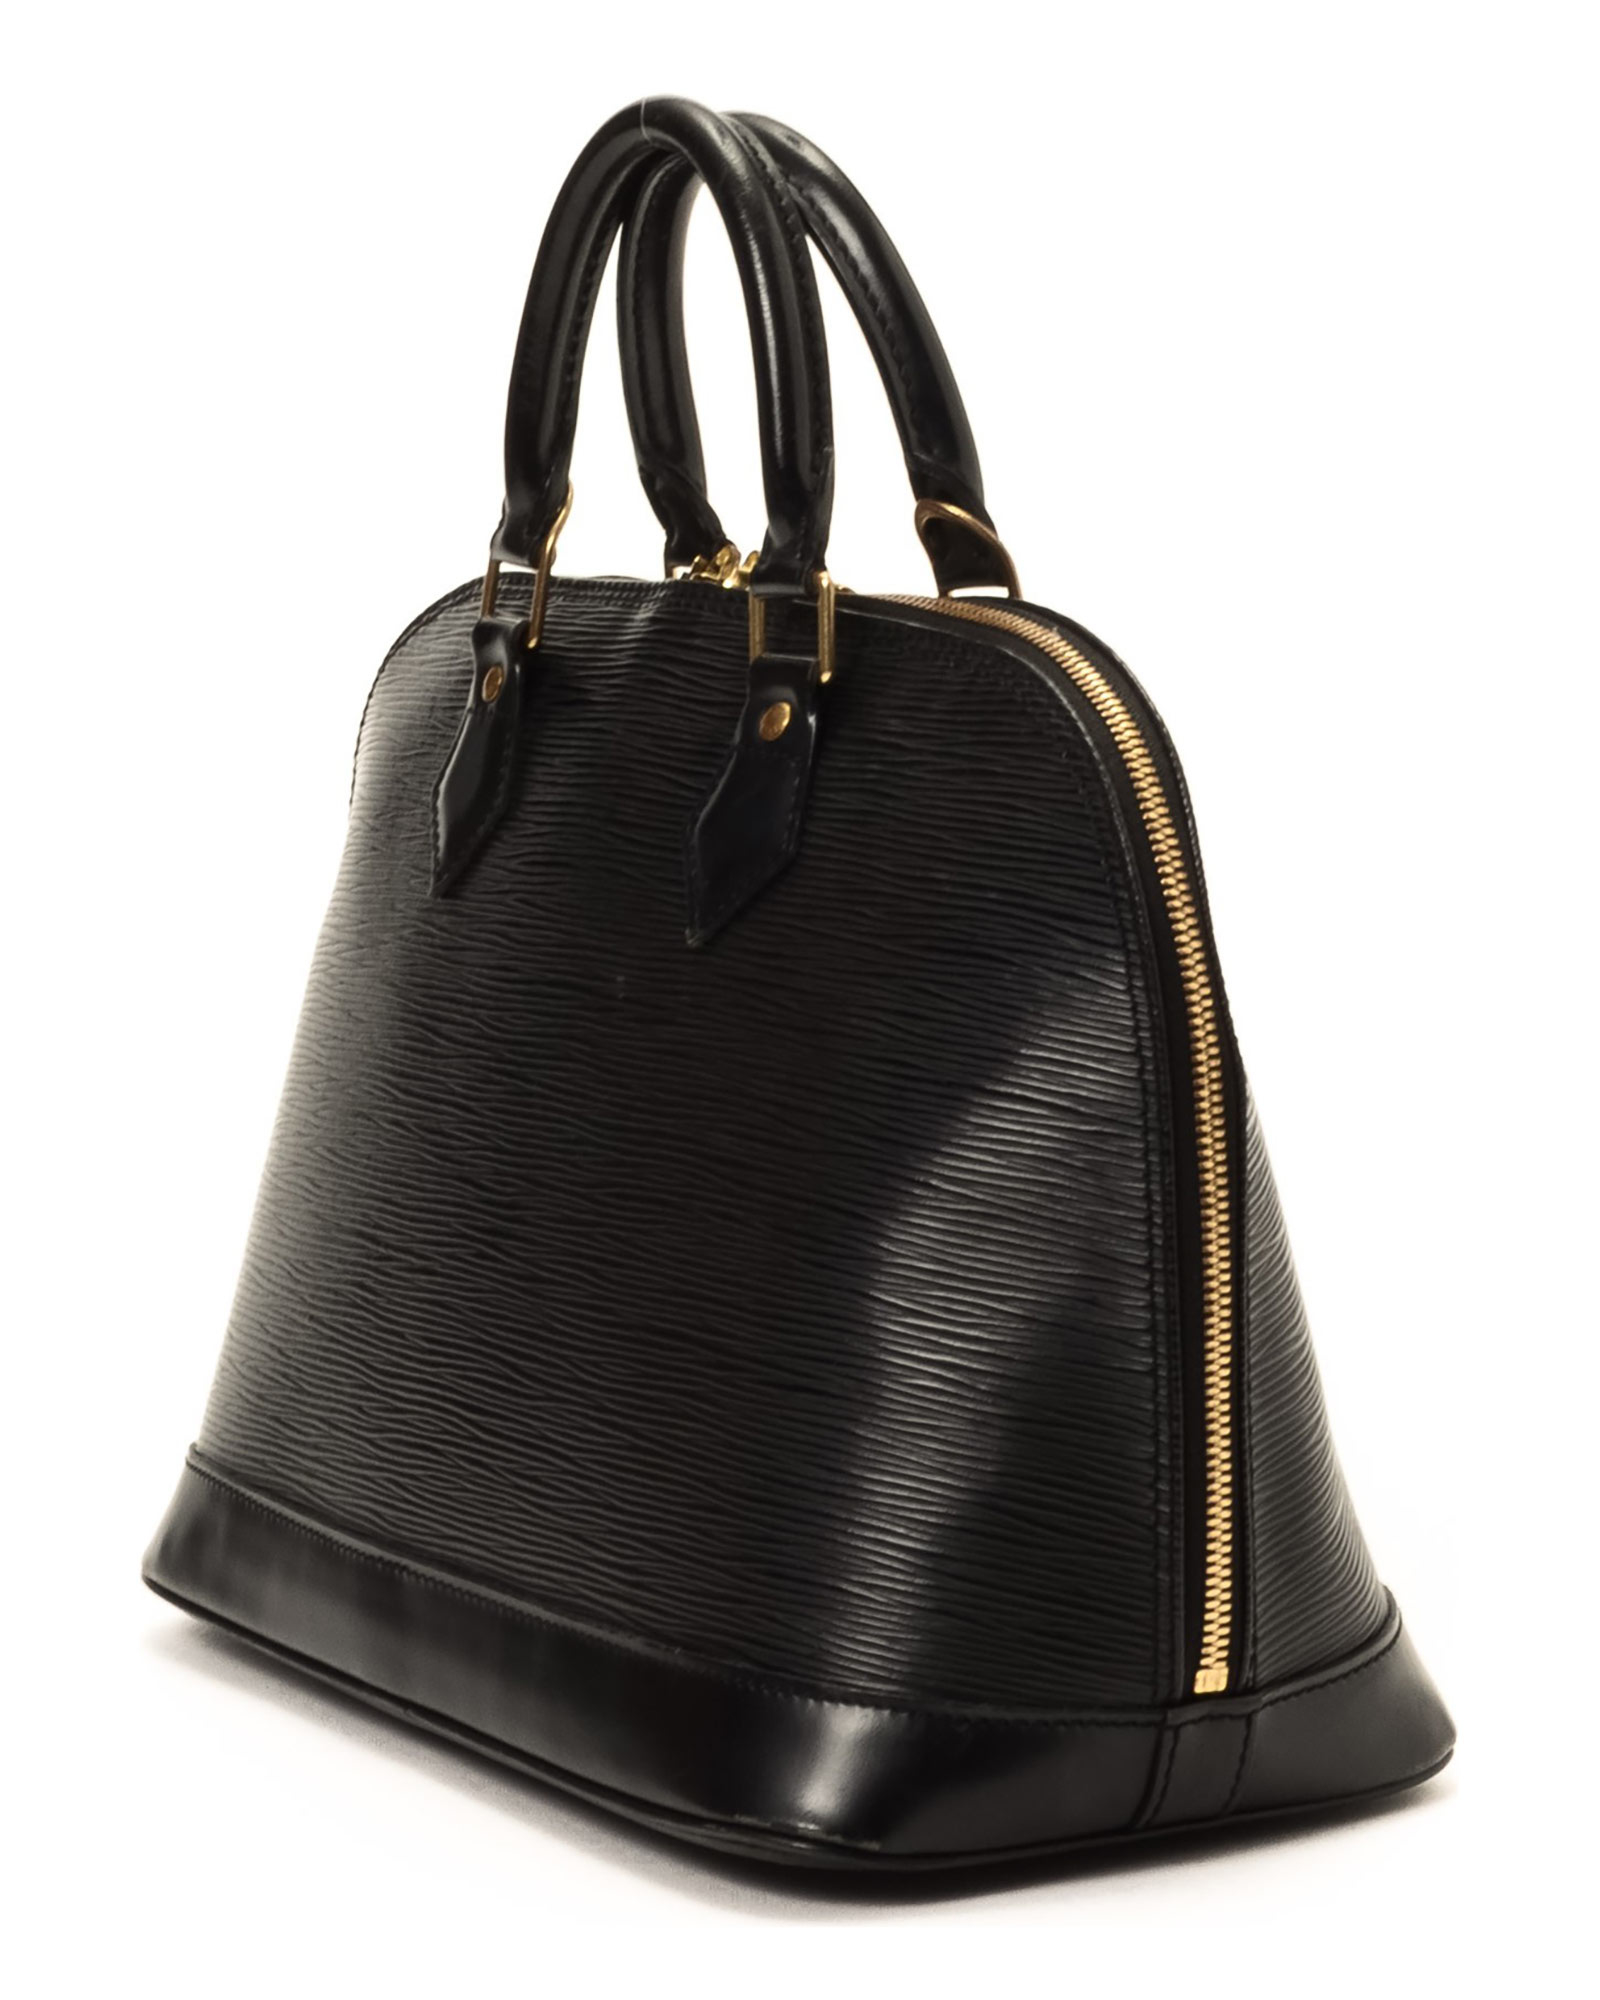 Lyst - Louis Vuitton Black Handbag - Vintage in Black for Men